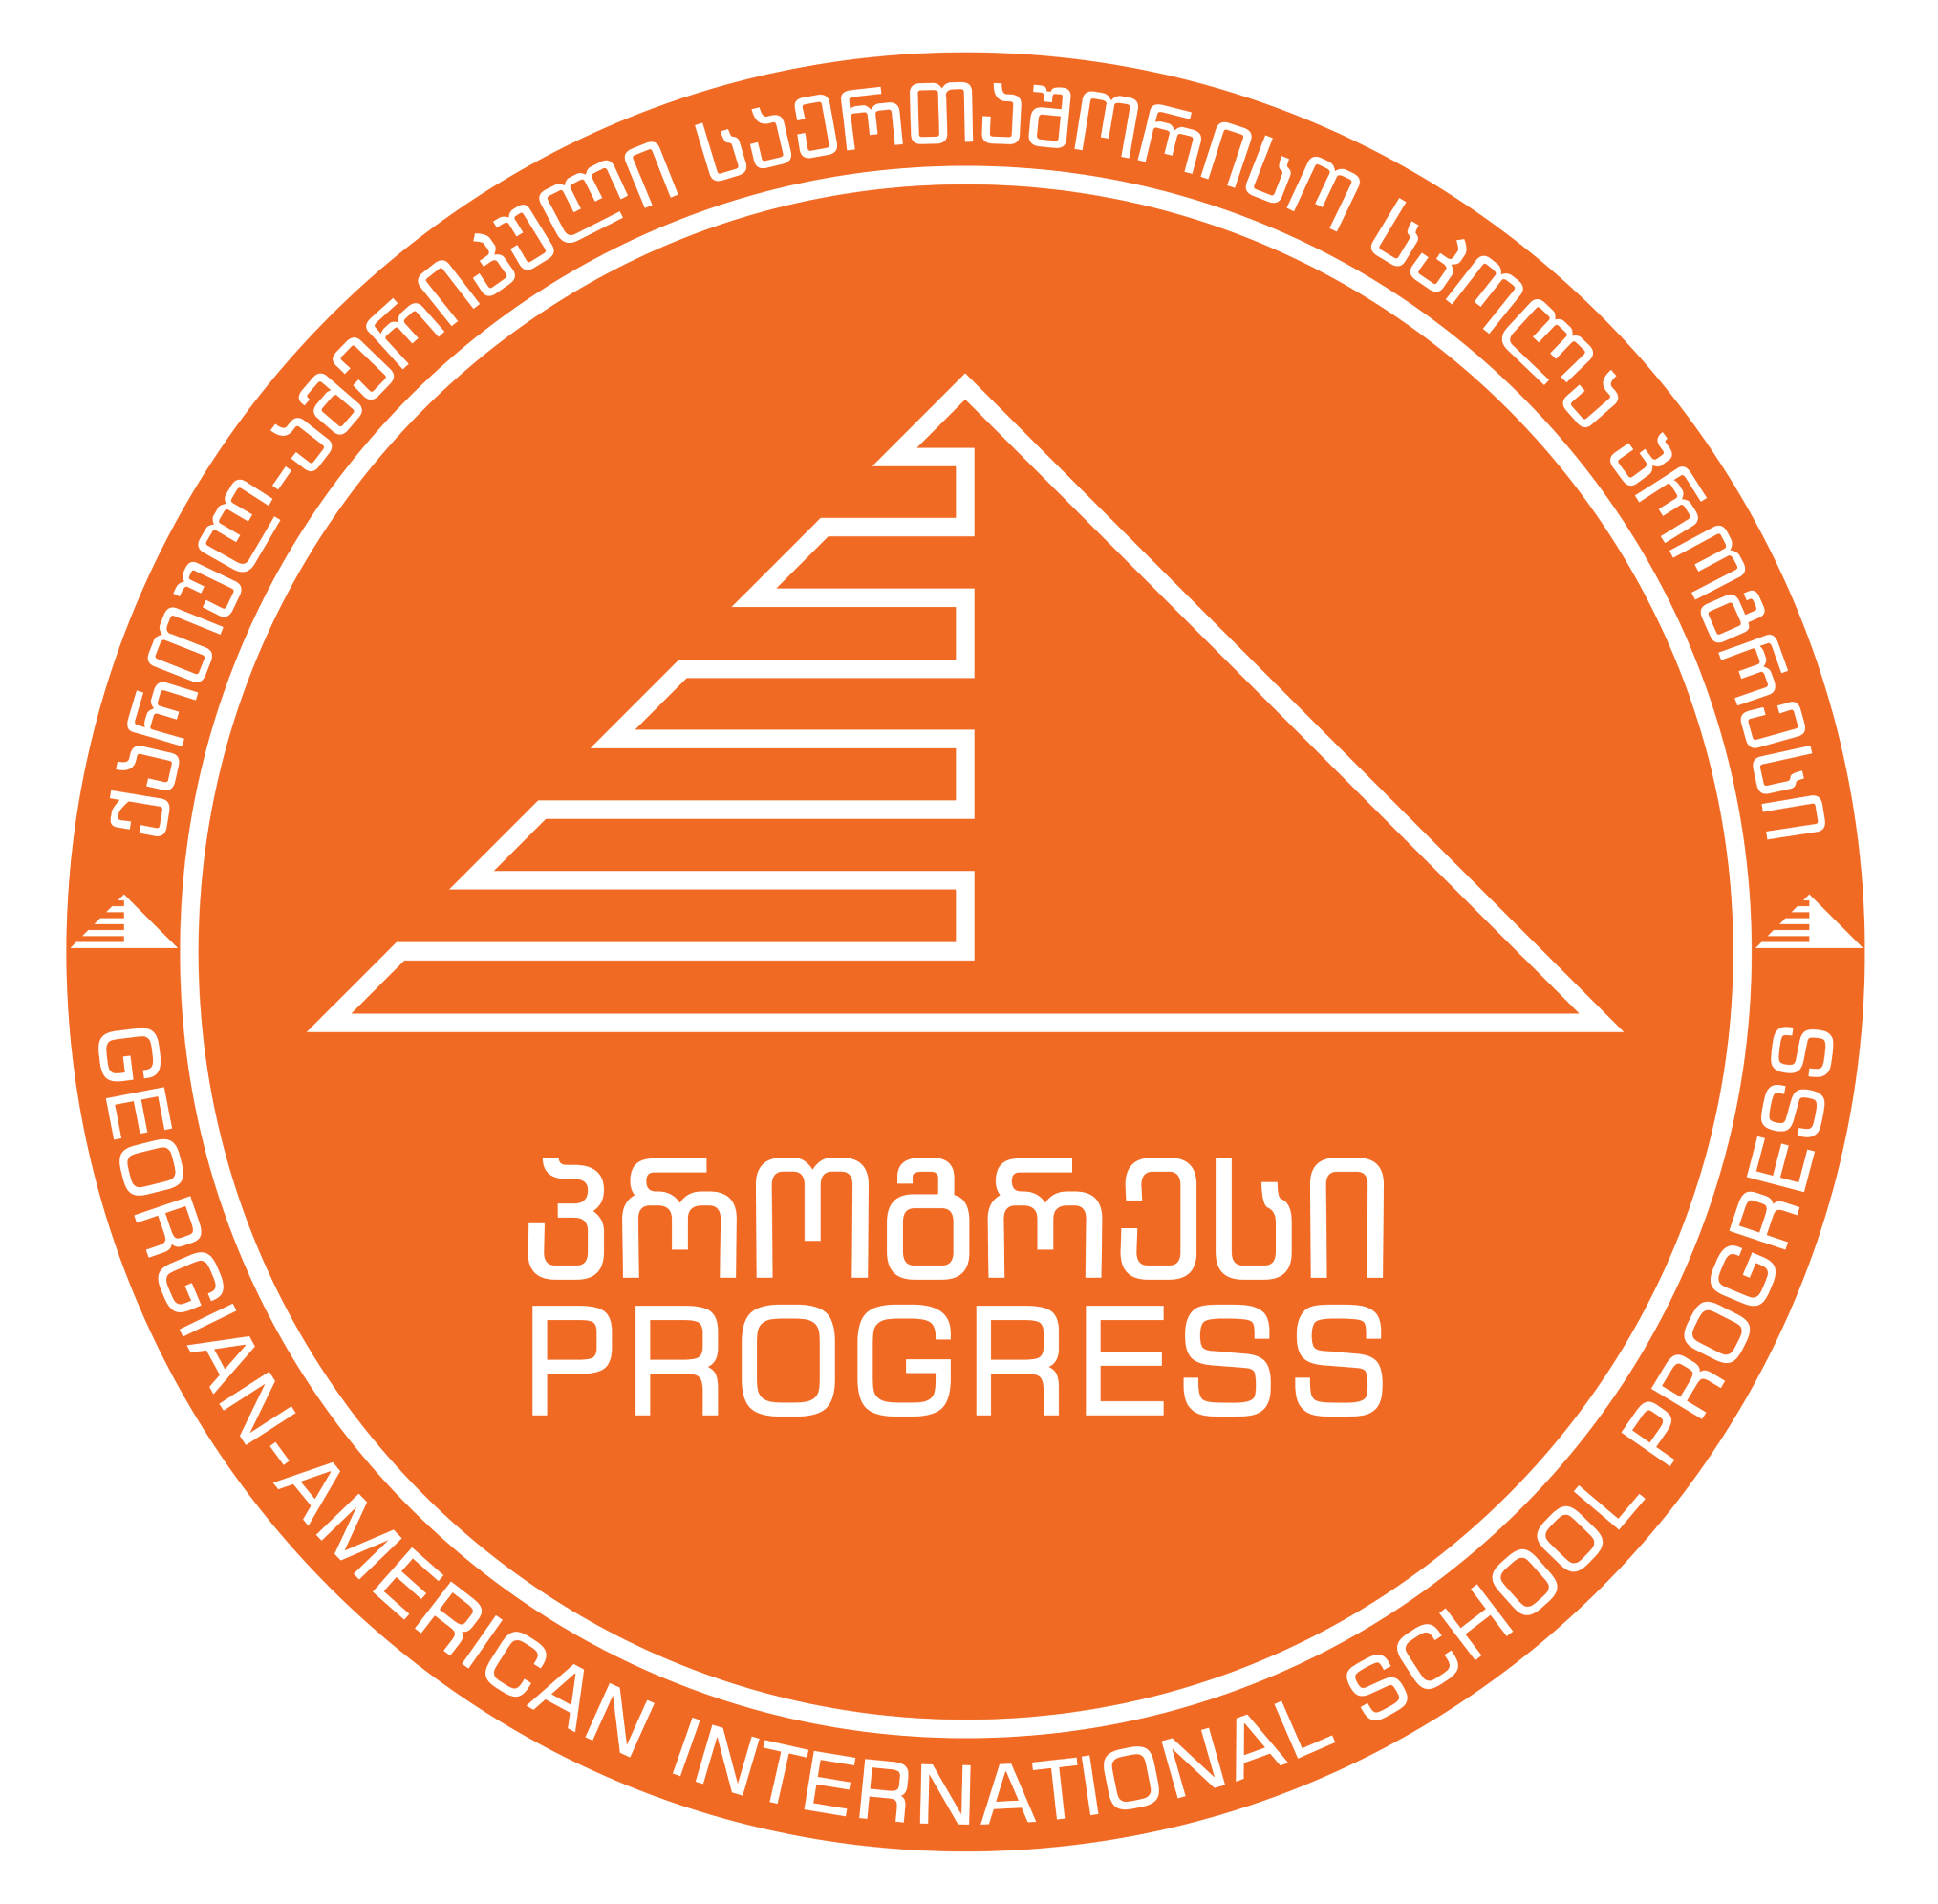 bautmi progress logo